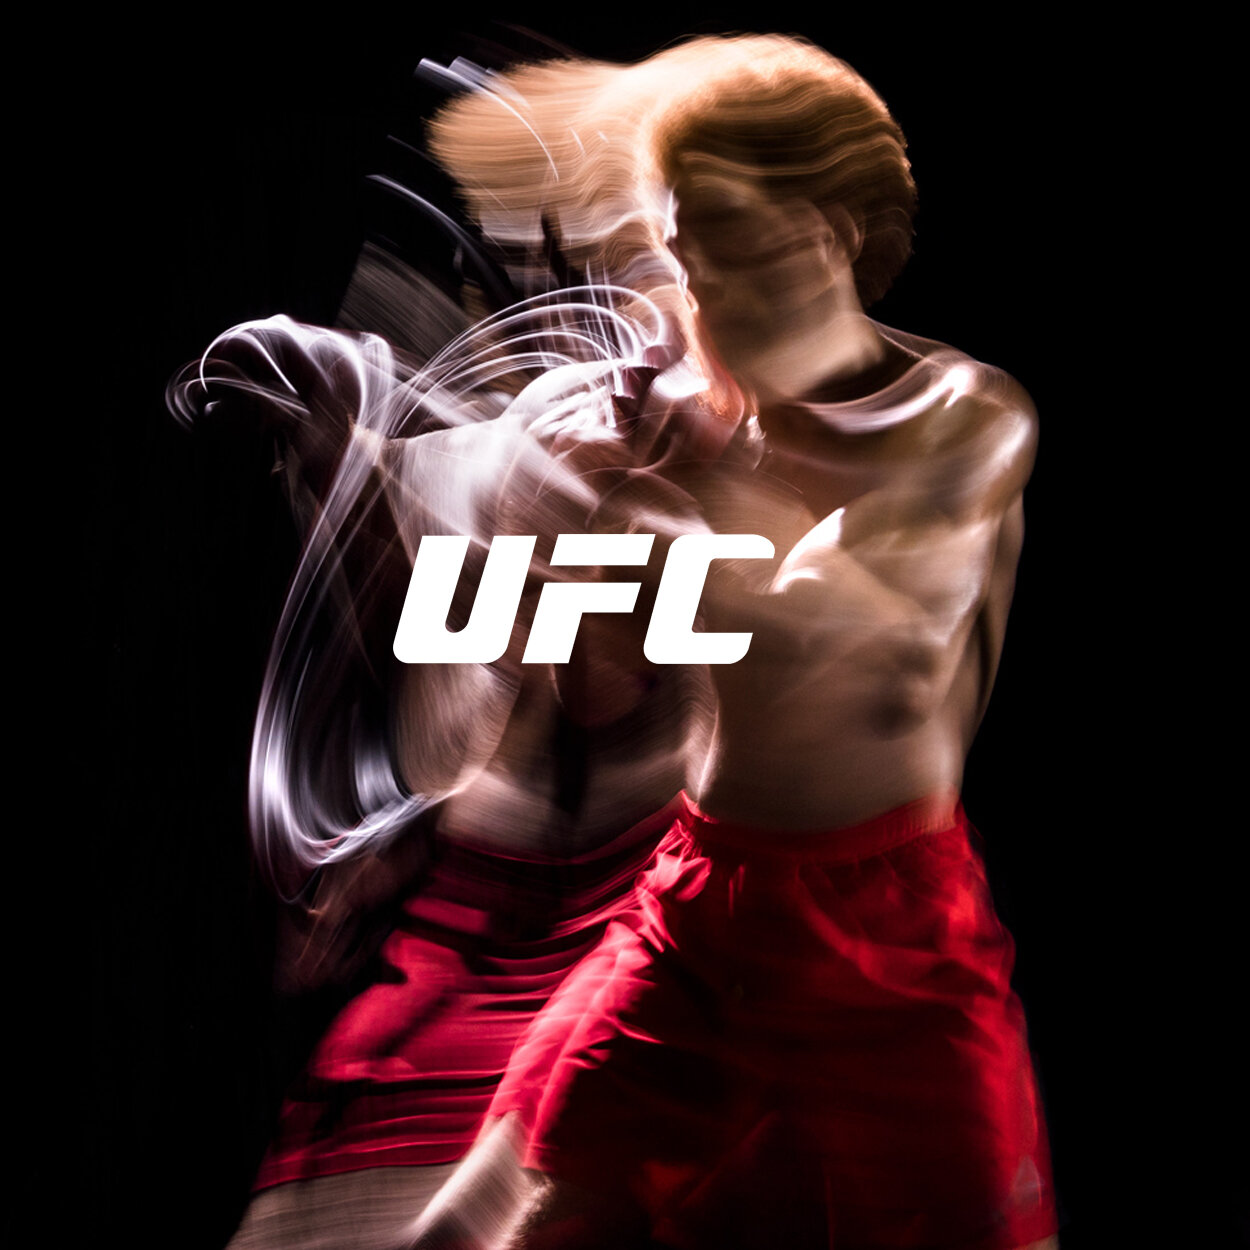 UFC_frontpage_square1250px.jpg